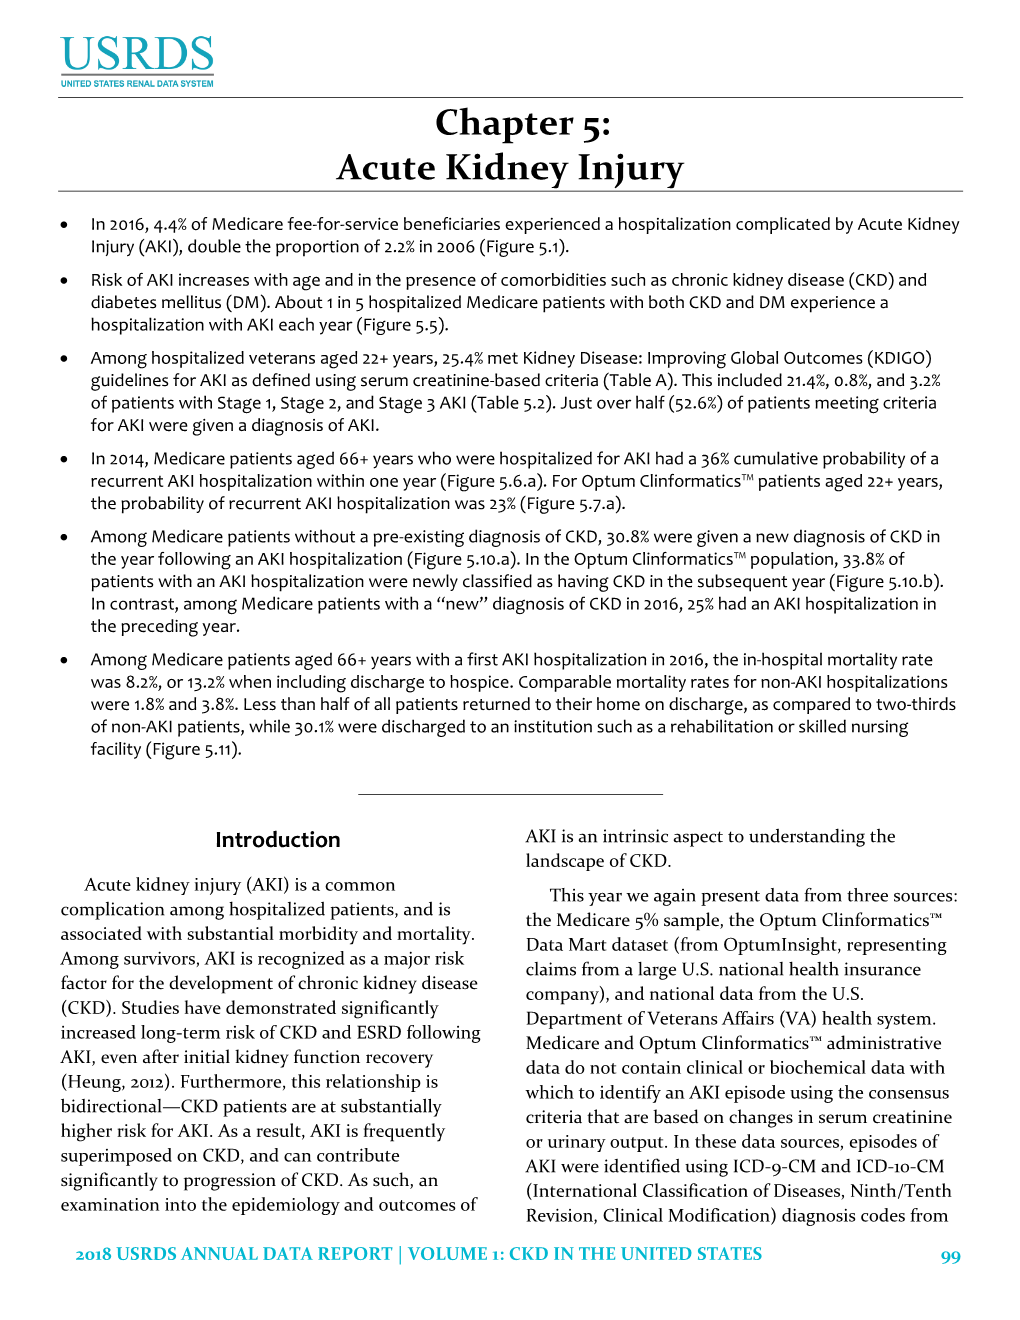 Chapter 5: Acute Kidney Injury